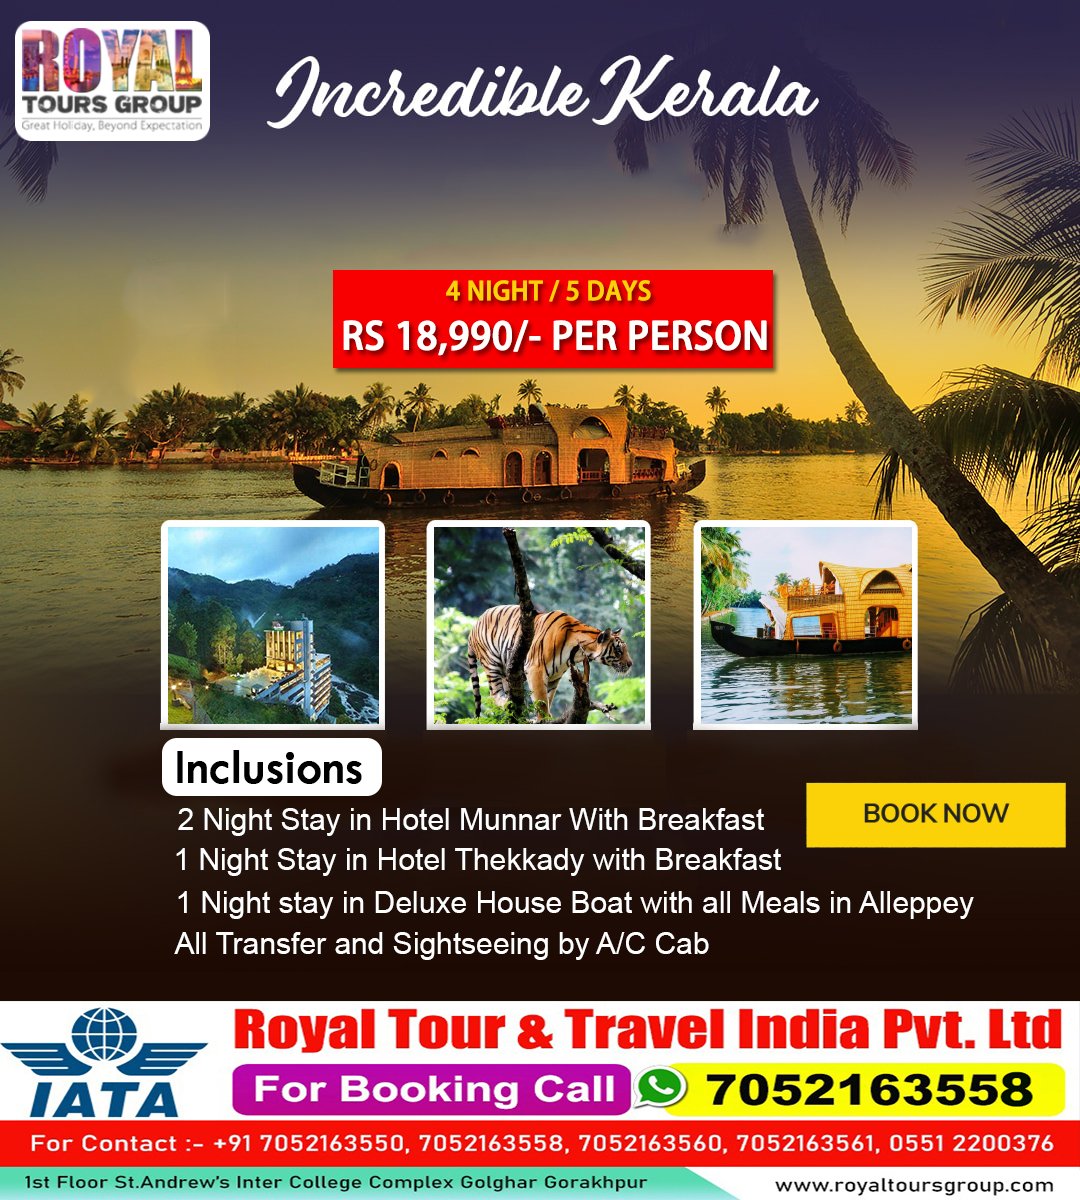 For Booking Call :- 070521 63558
info@royaltoursgroup.com
-----------------------------------------

#travelagent #royalholidaysgorakhpur #Gorakhpur #kerala #keralatourism #travel #everyone #airticket #flight #agency #taxi #holiday #holidaypackages #travel